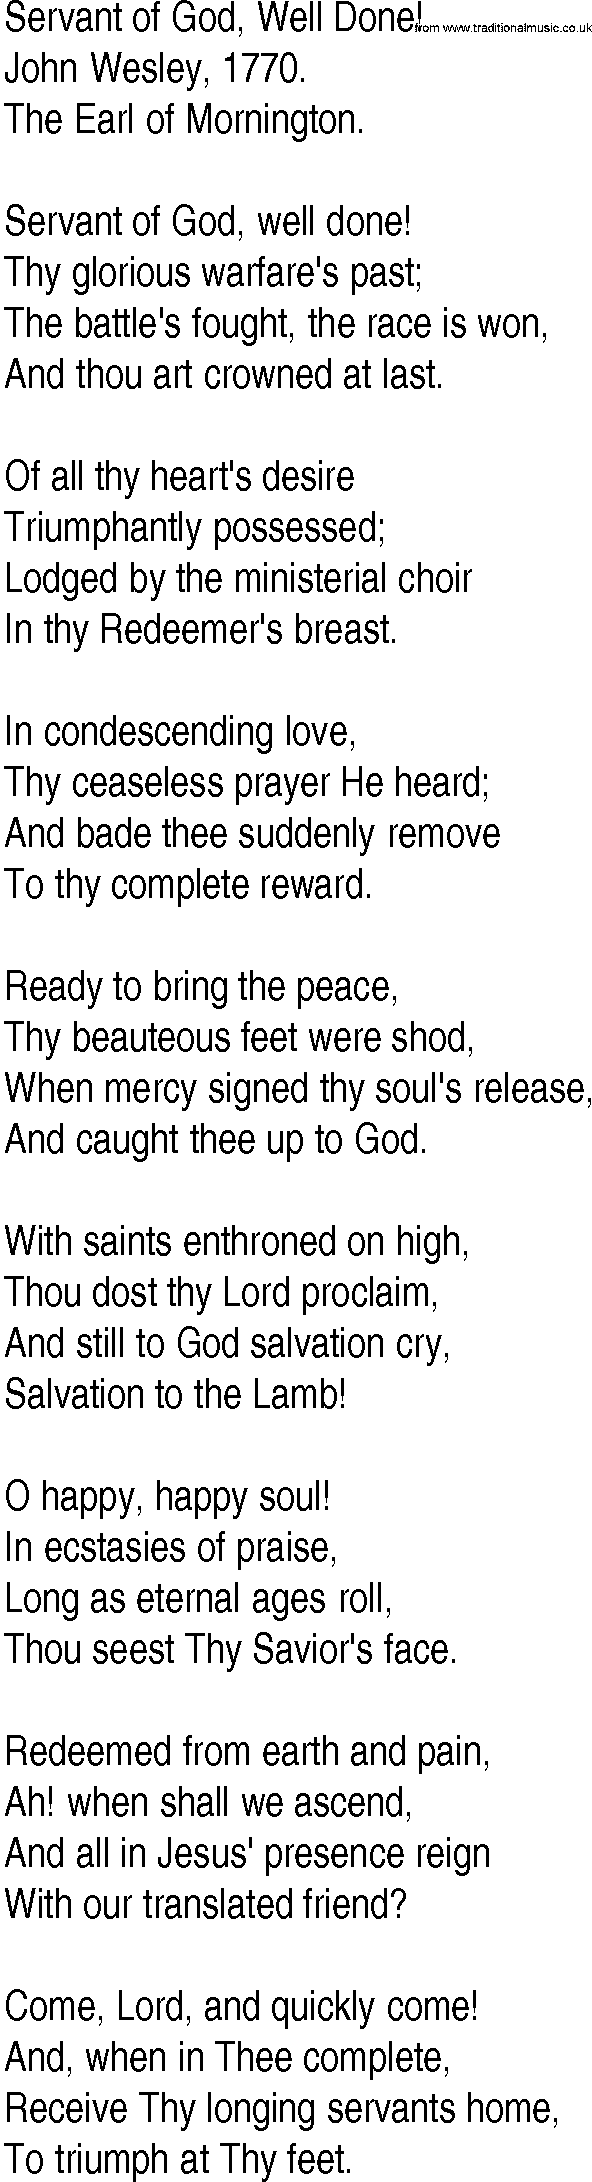 Hymn and Gospel Song: Servant of God, Well Done! by John Wesley lyrics